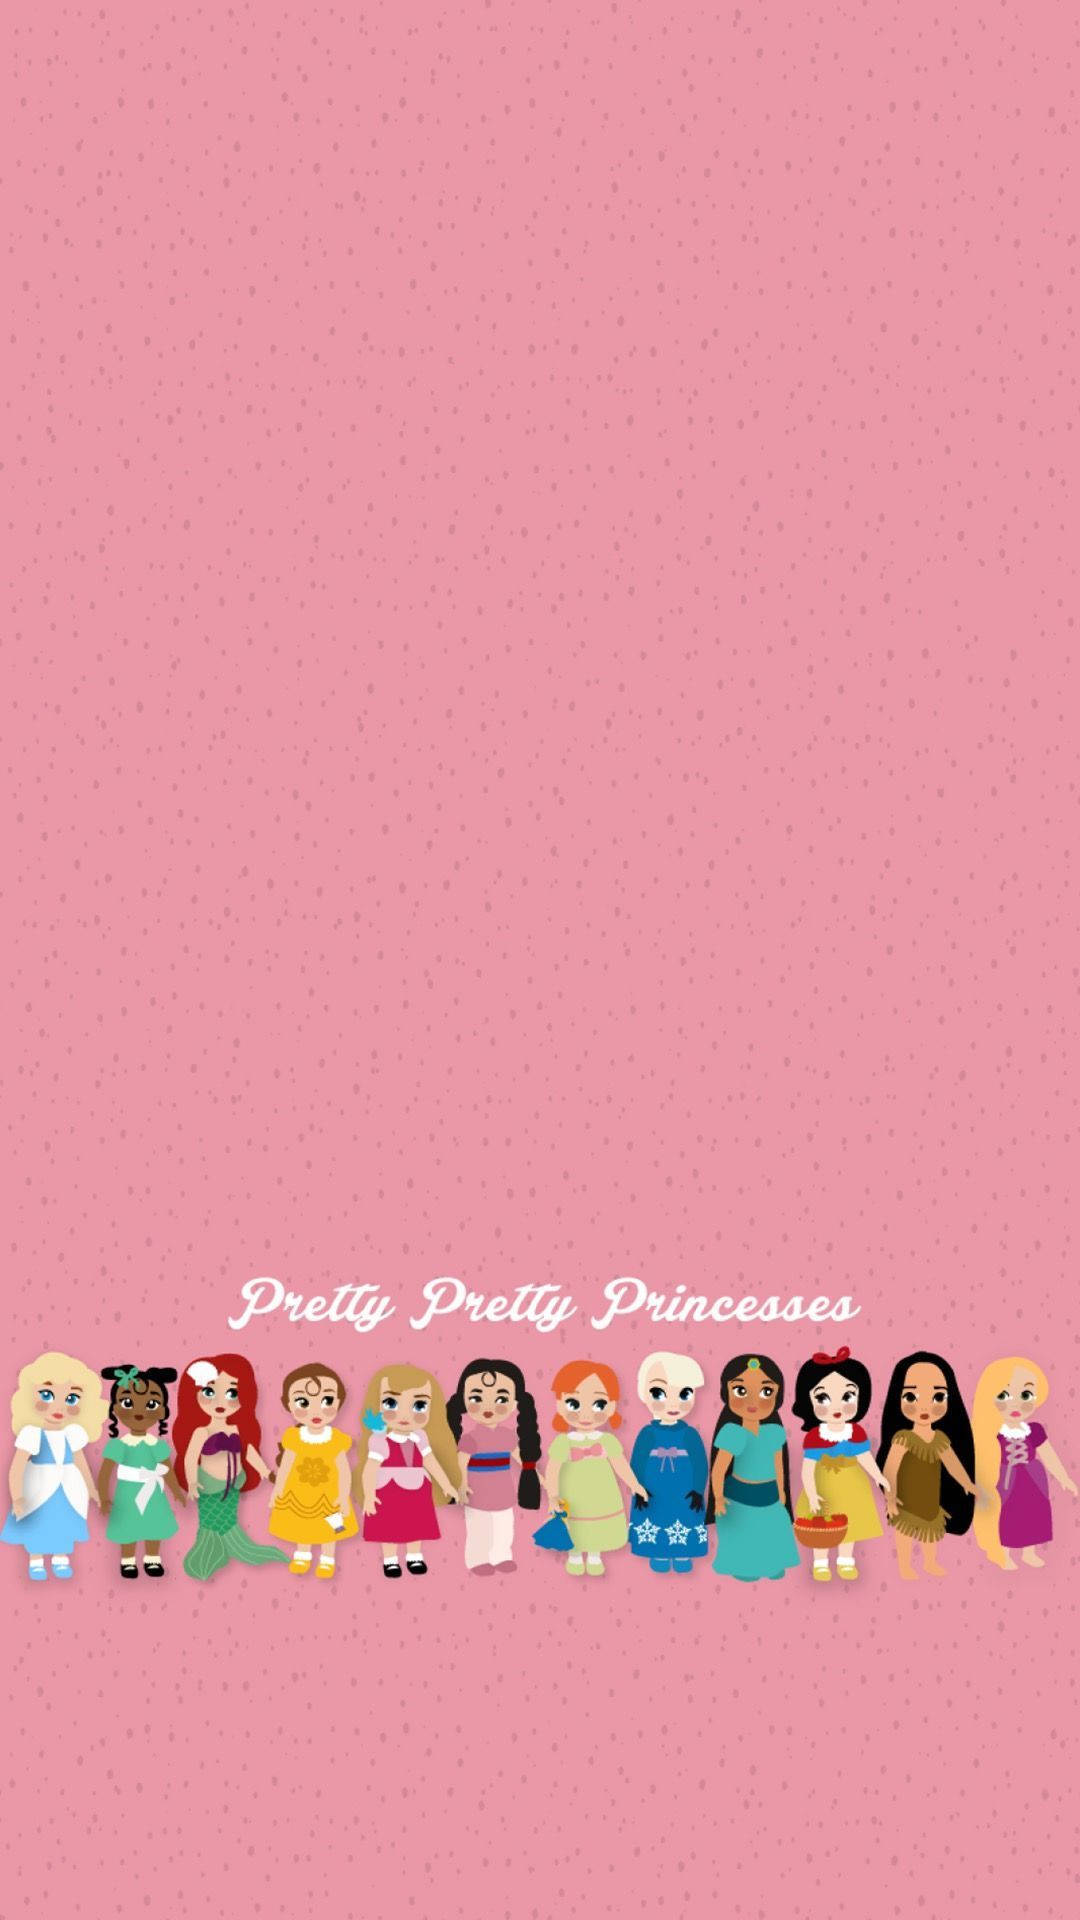 100+] Cute Aesthetic Disney Princess Wallpapers